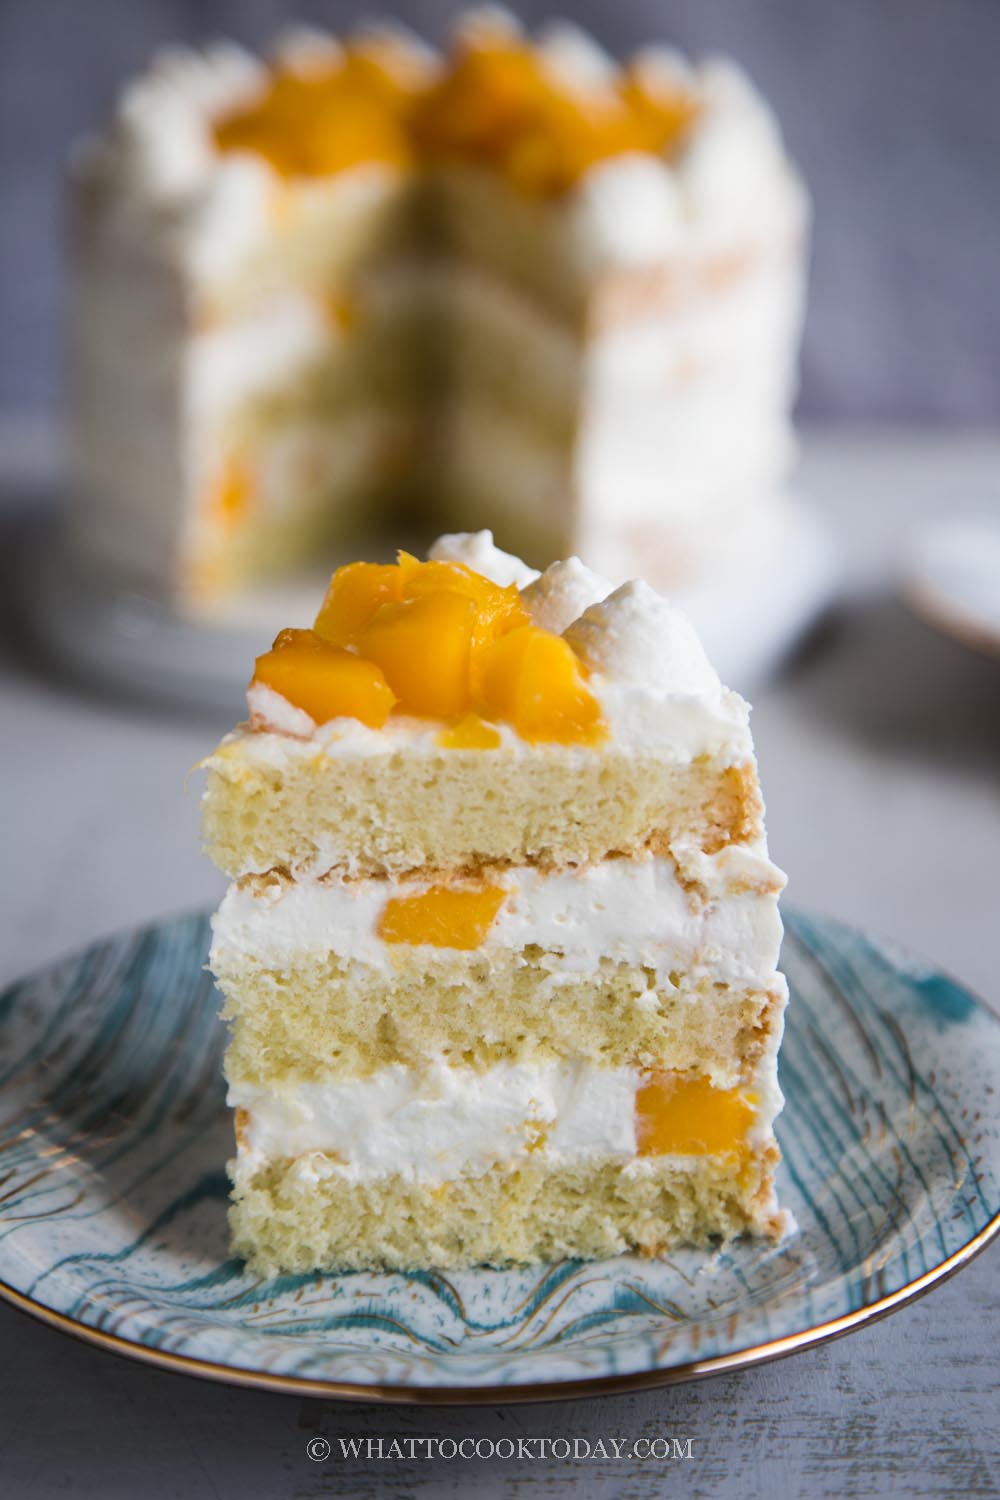 TheCake Workshop - Our signature mango cake layered with sweet mango  slices. | Facebook